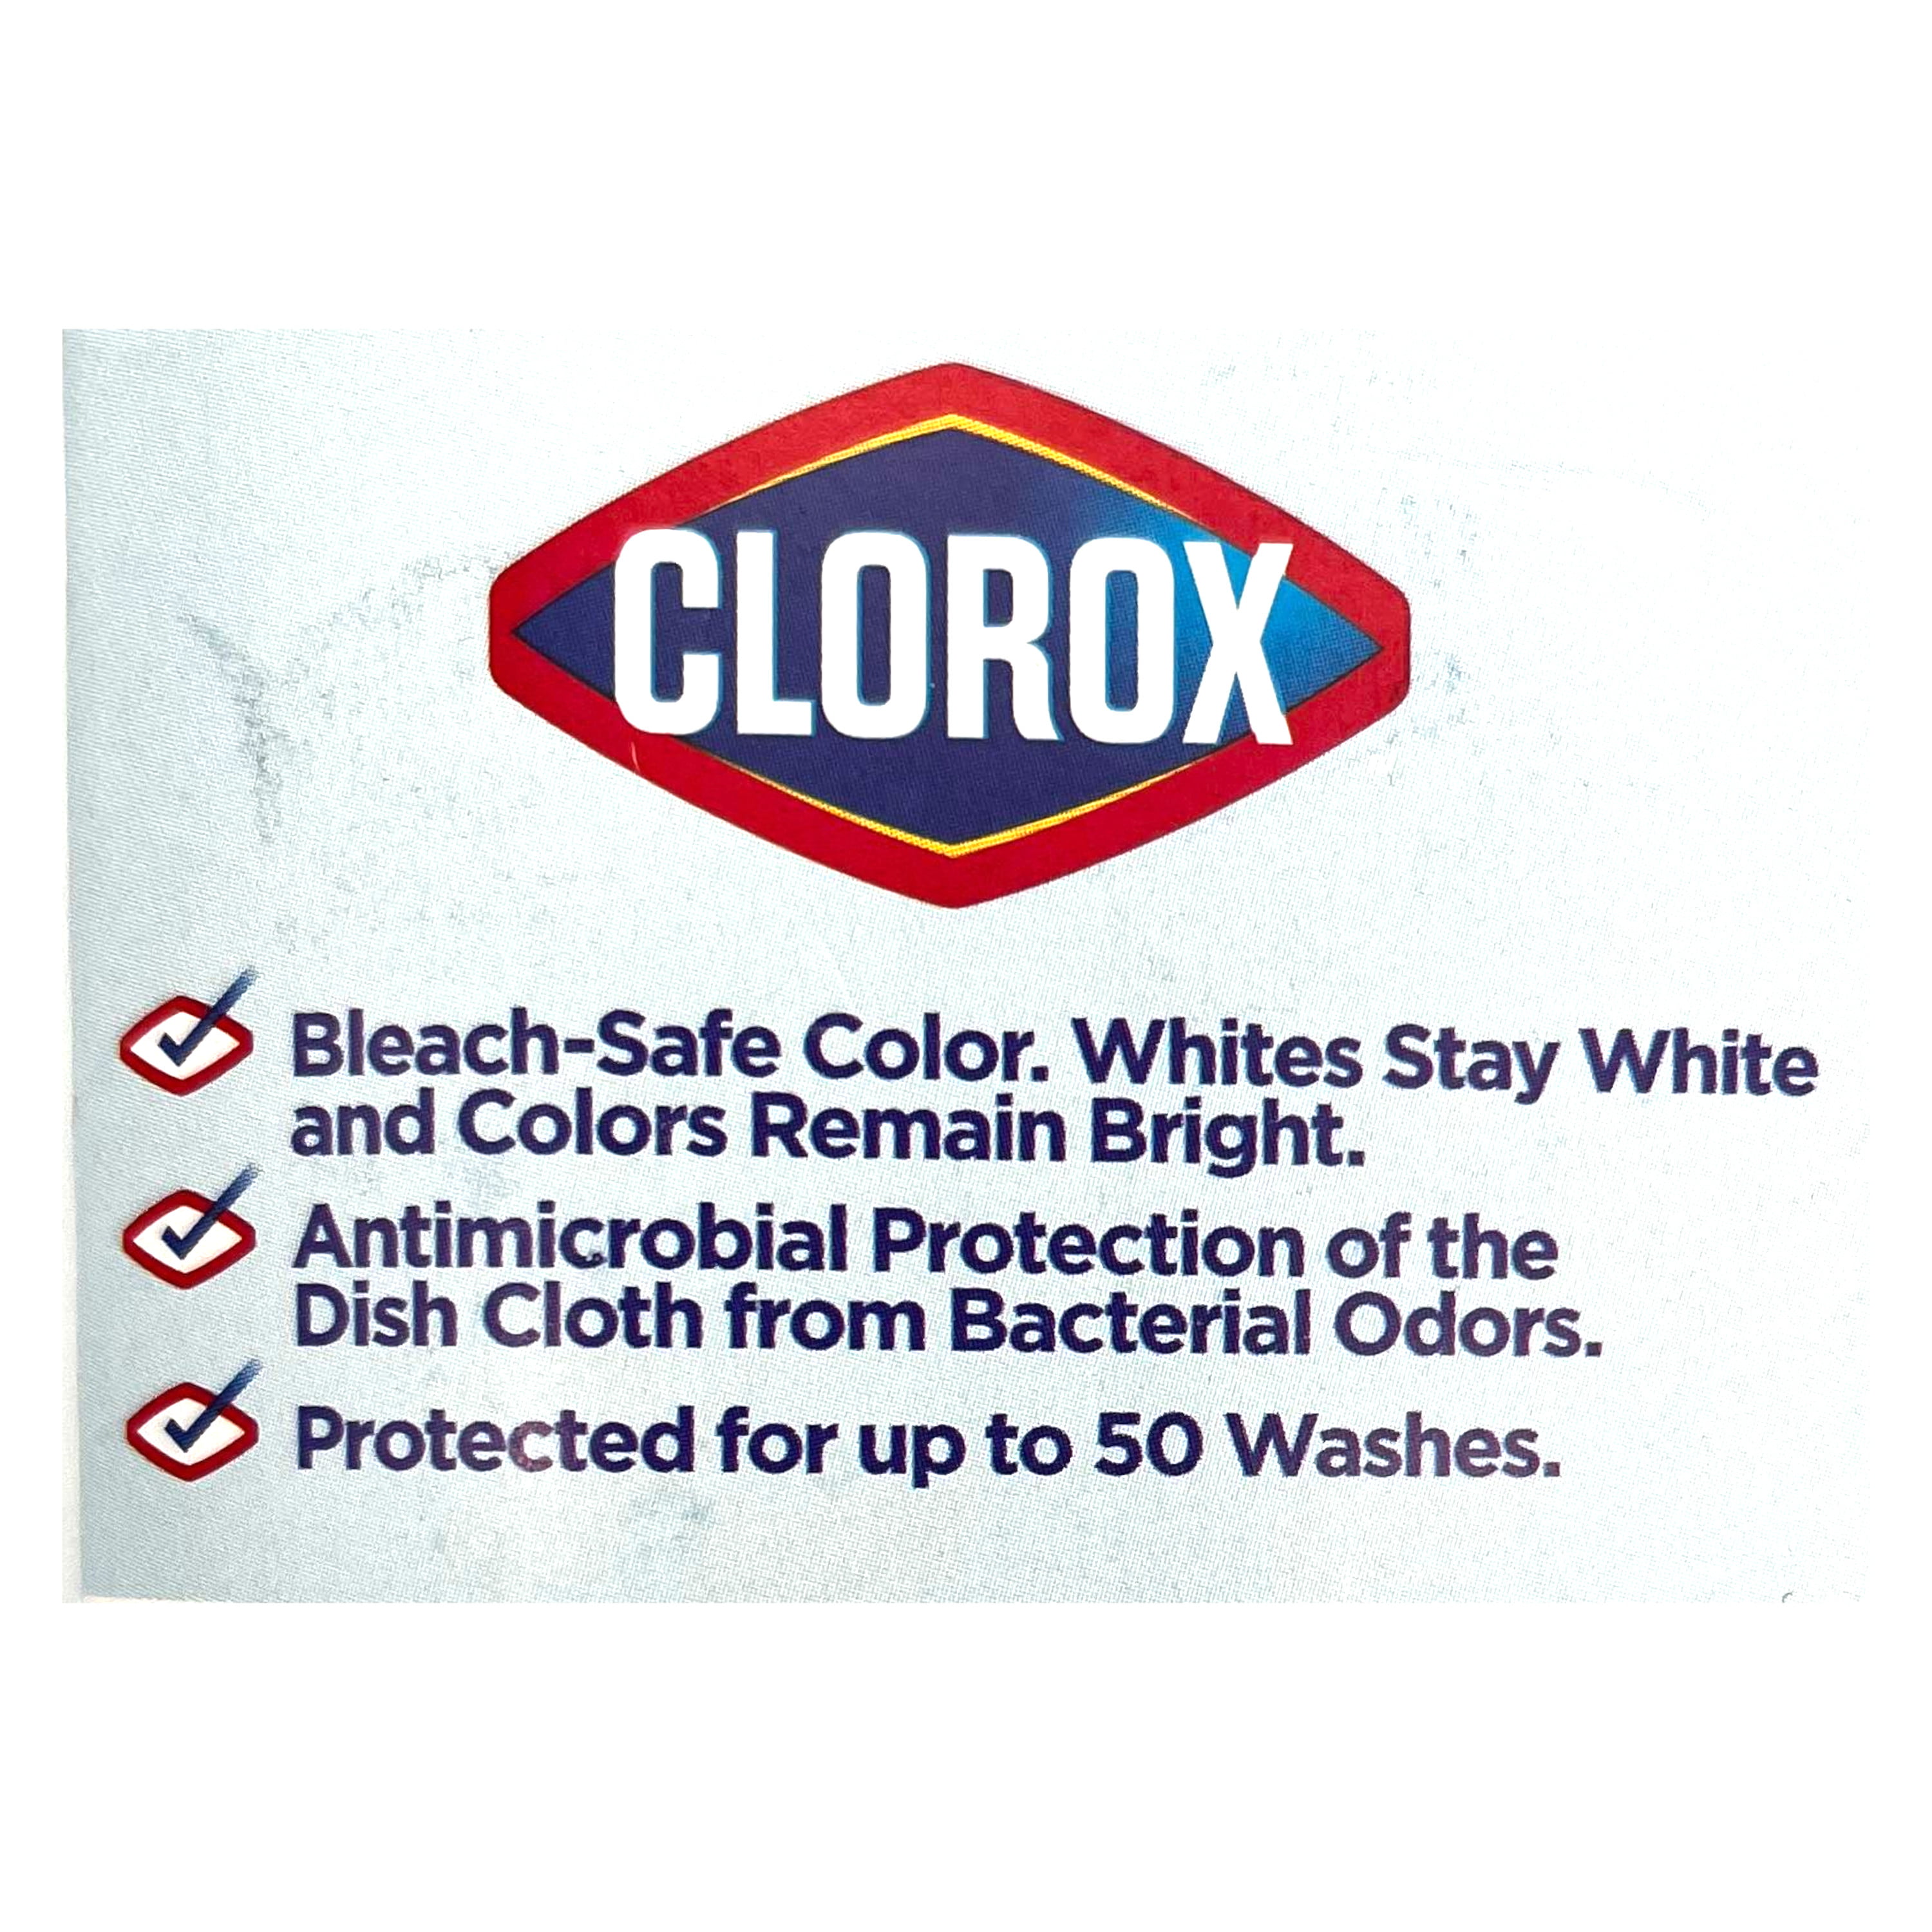 Clorox makes dish cloths : r/mildlyinteresting